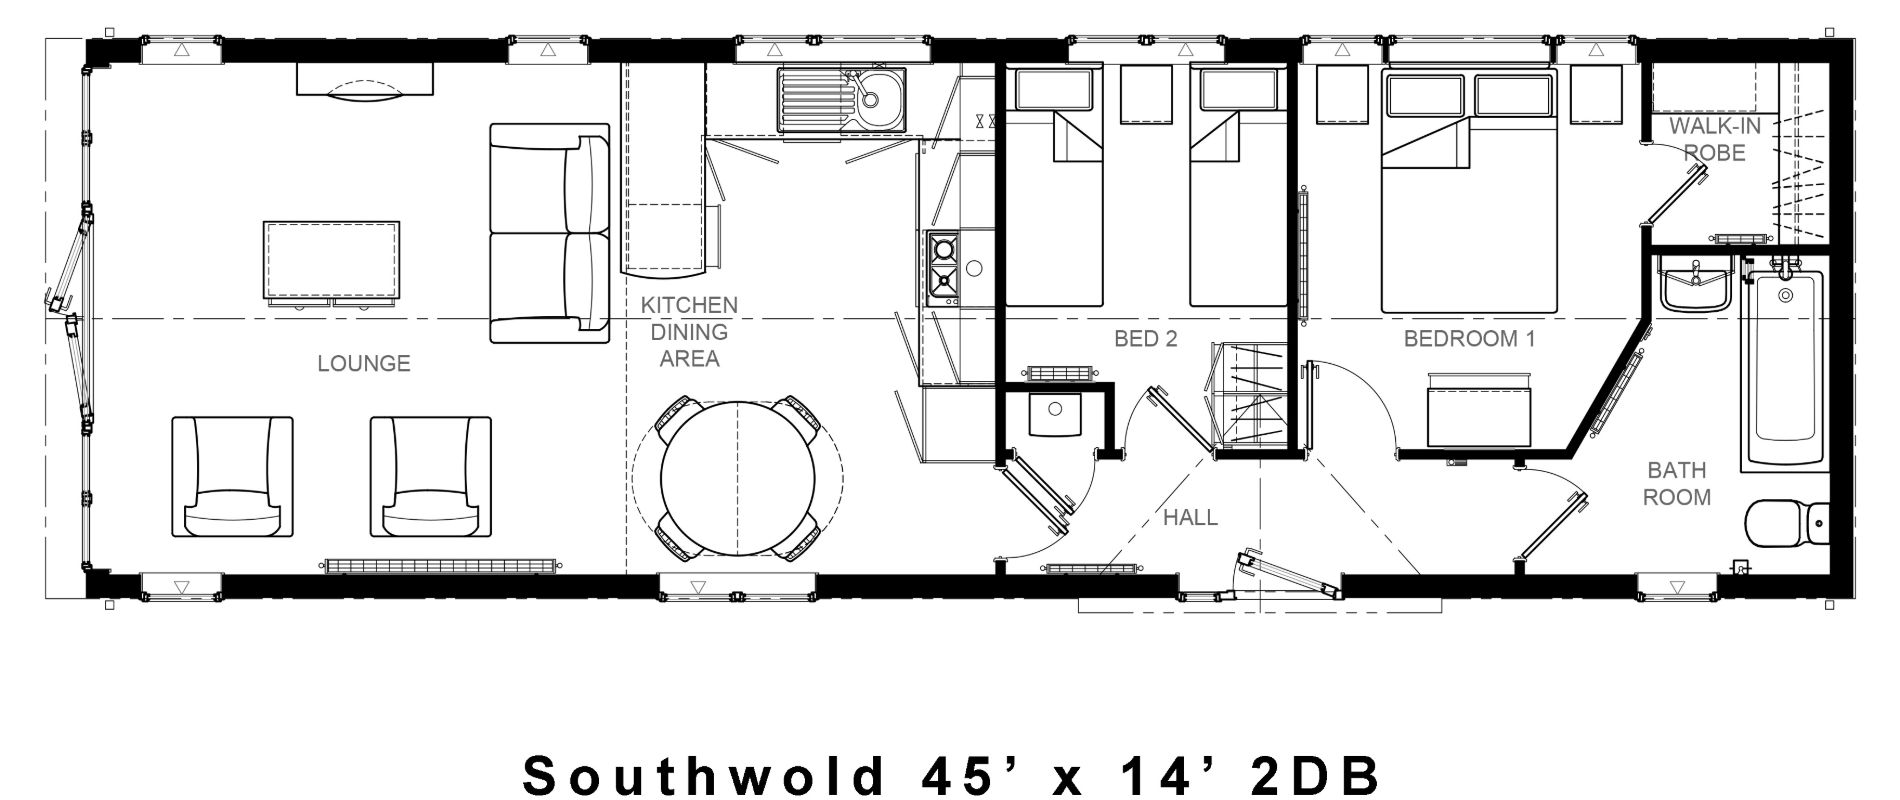 Southwold Lodge Floor Plan